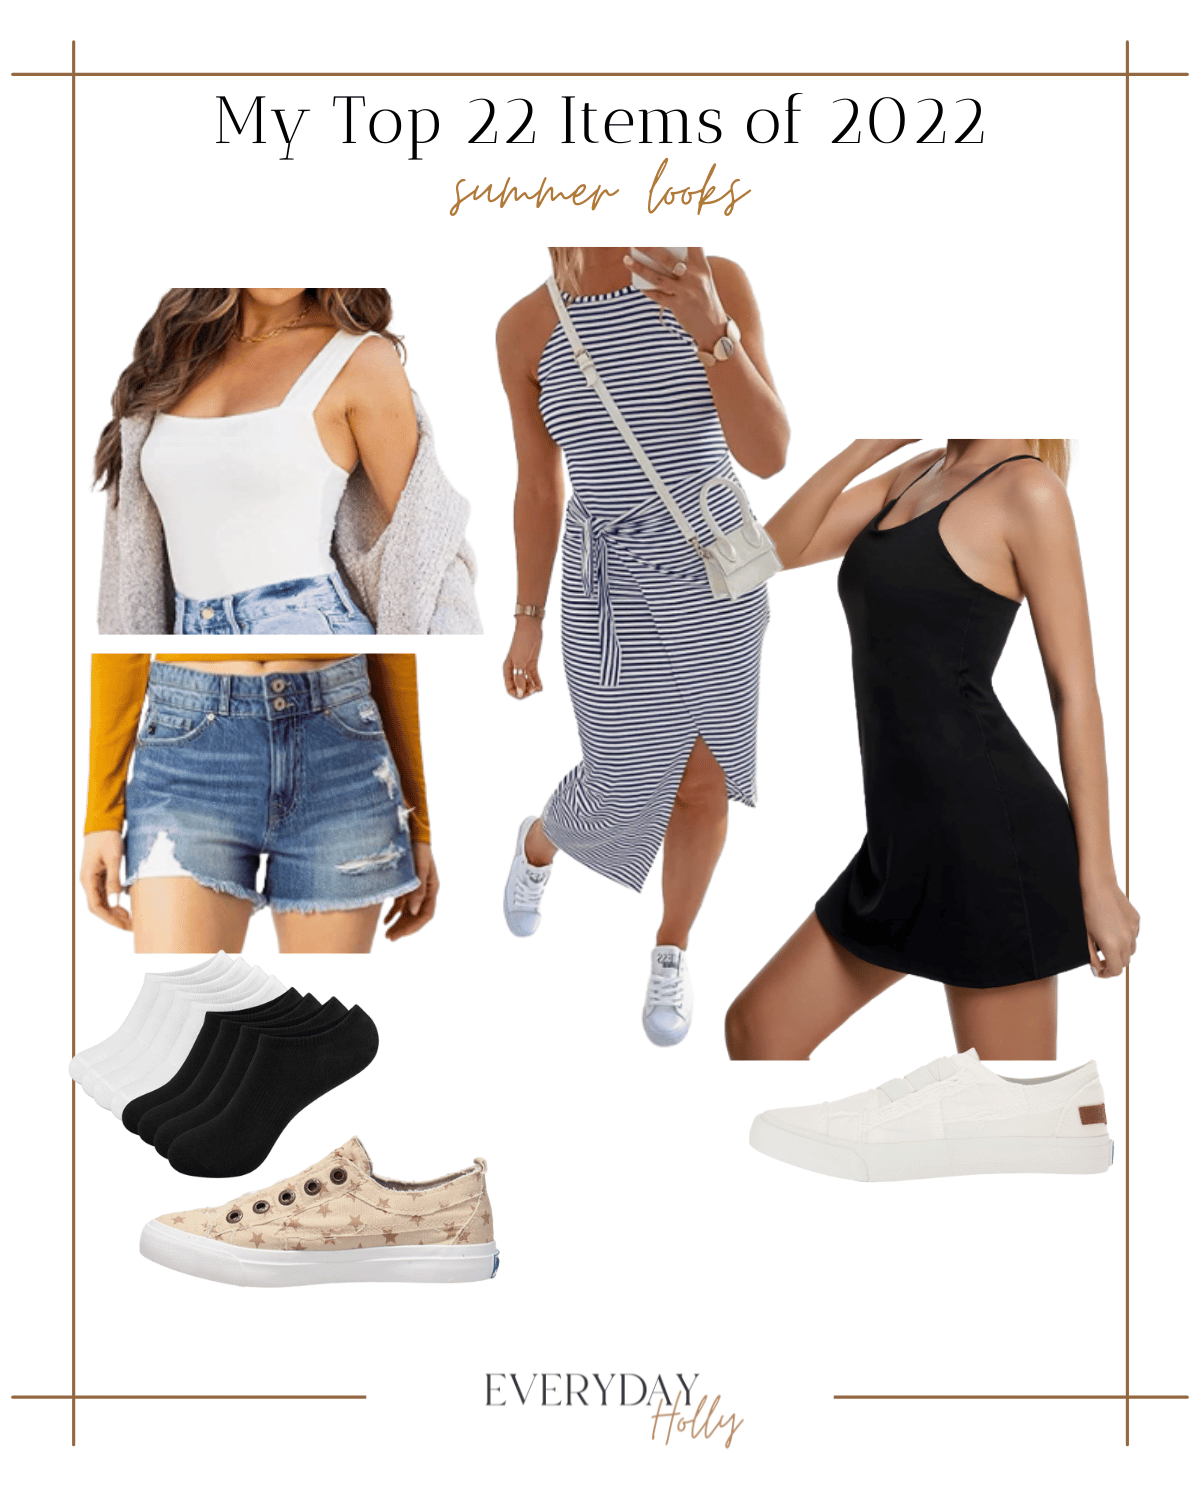 summer looks, top 22 items, amazon fashion items, tank, shorts, dresses, sneakers, shoes, socks, sundresses 